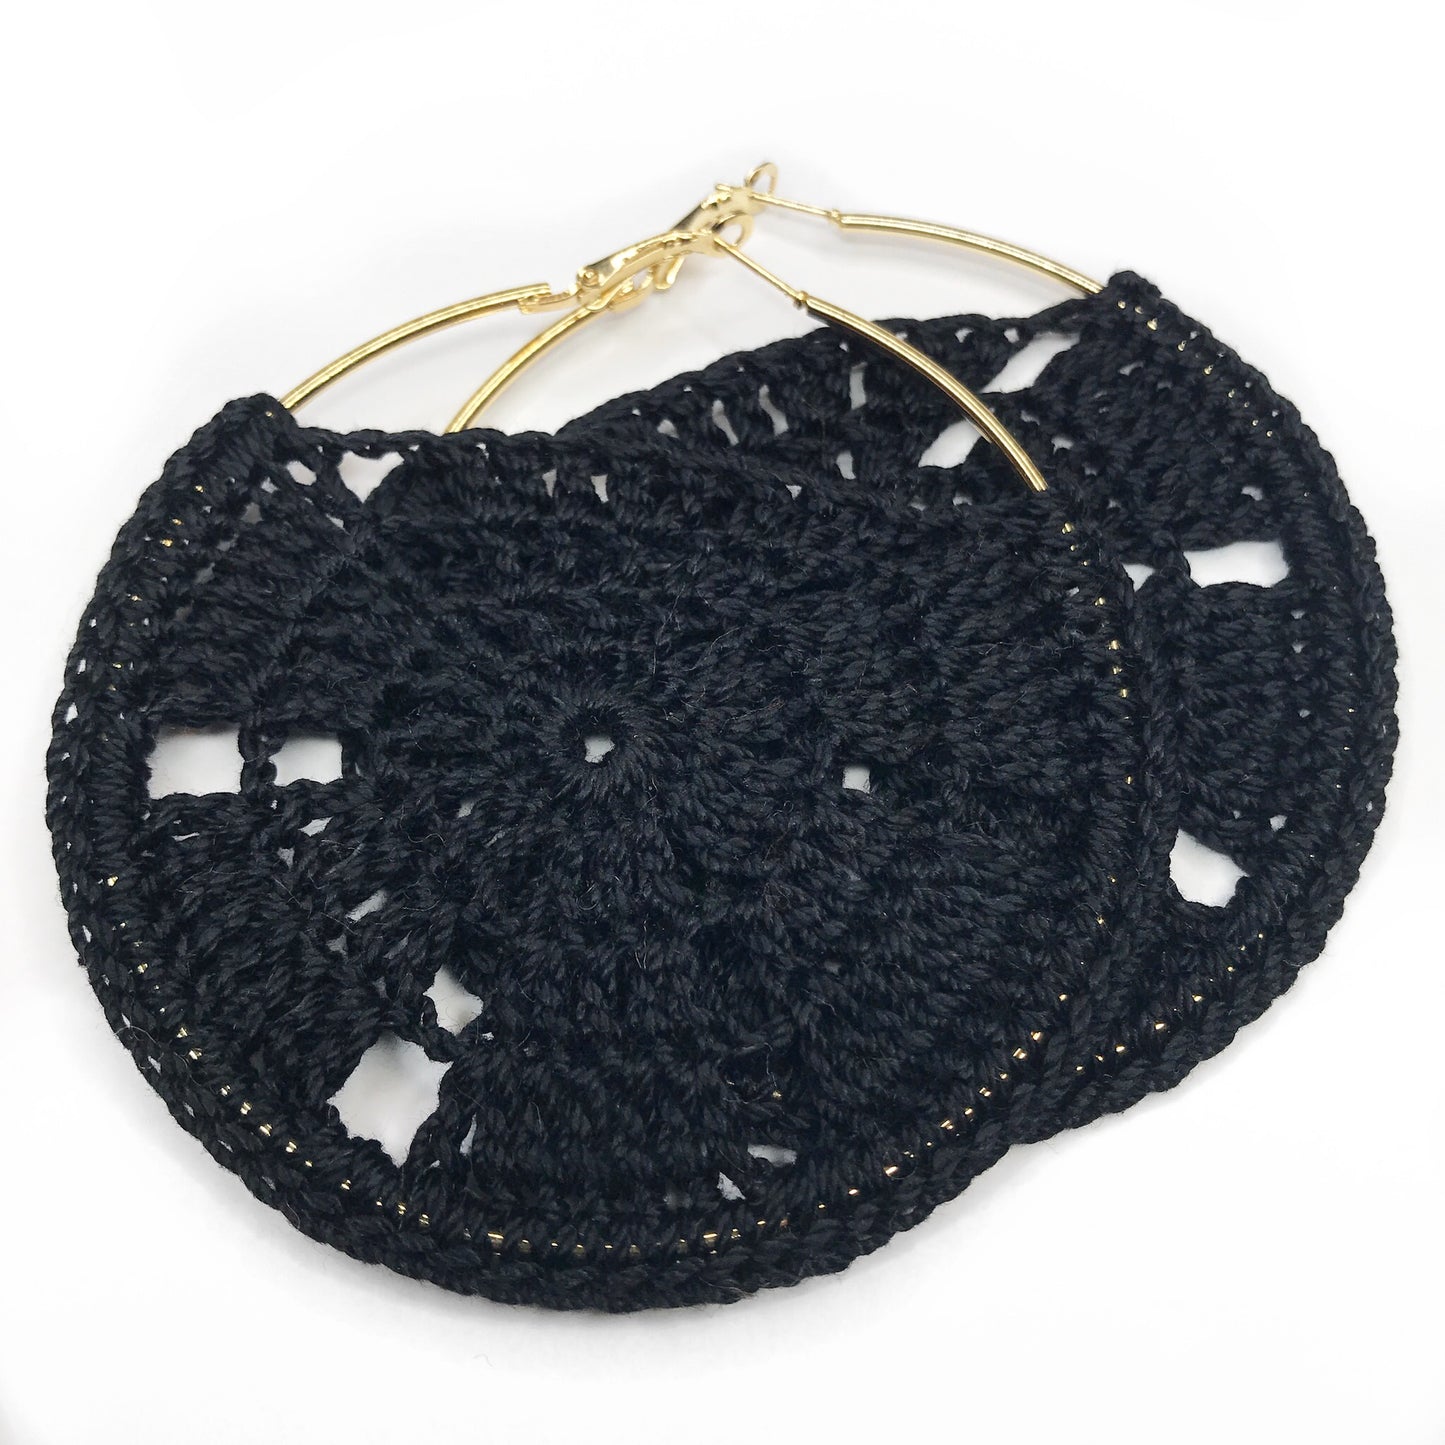 LUDA Crochet Hoop Earrings